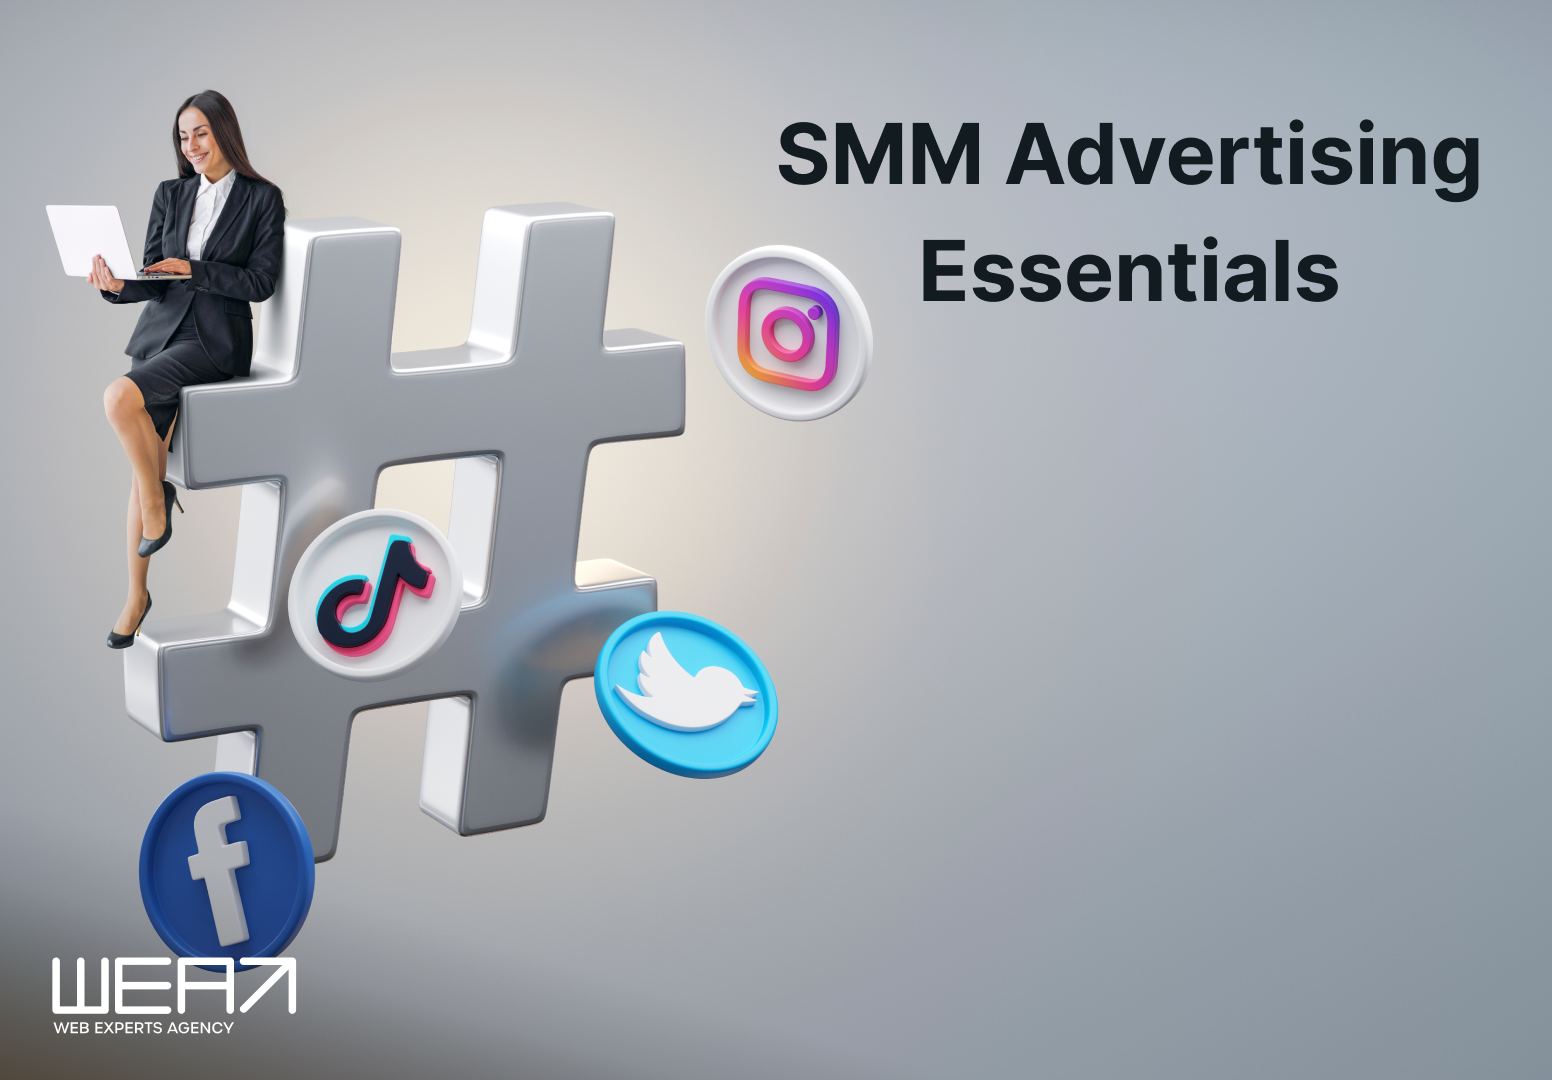 SMM advertising